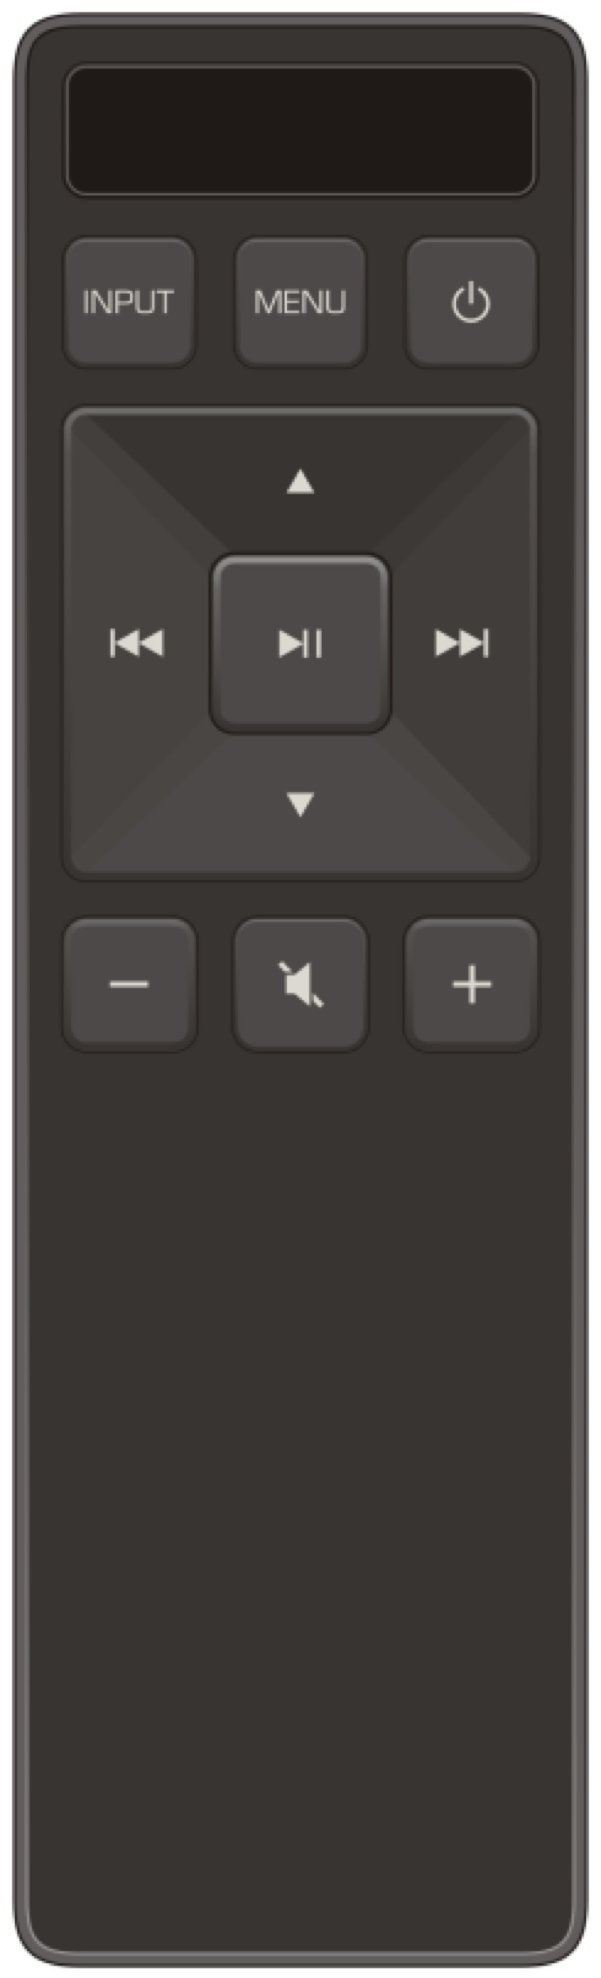 Smartby XRS500-B Remote Control for Vizio Sound Bar SB4251W-B4